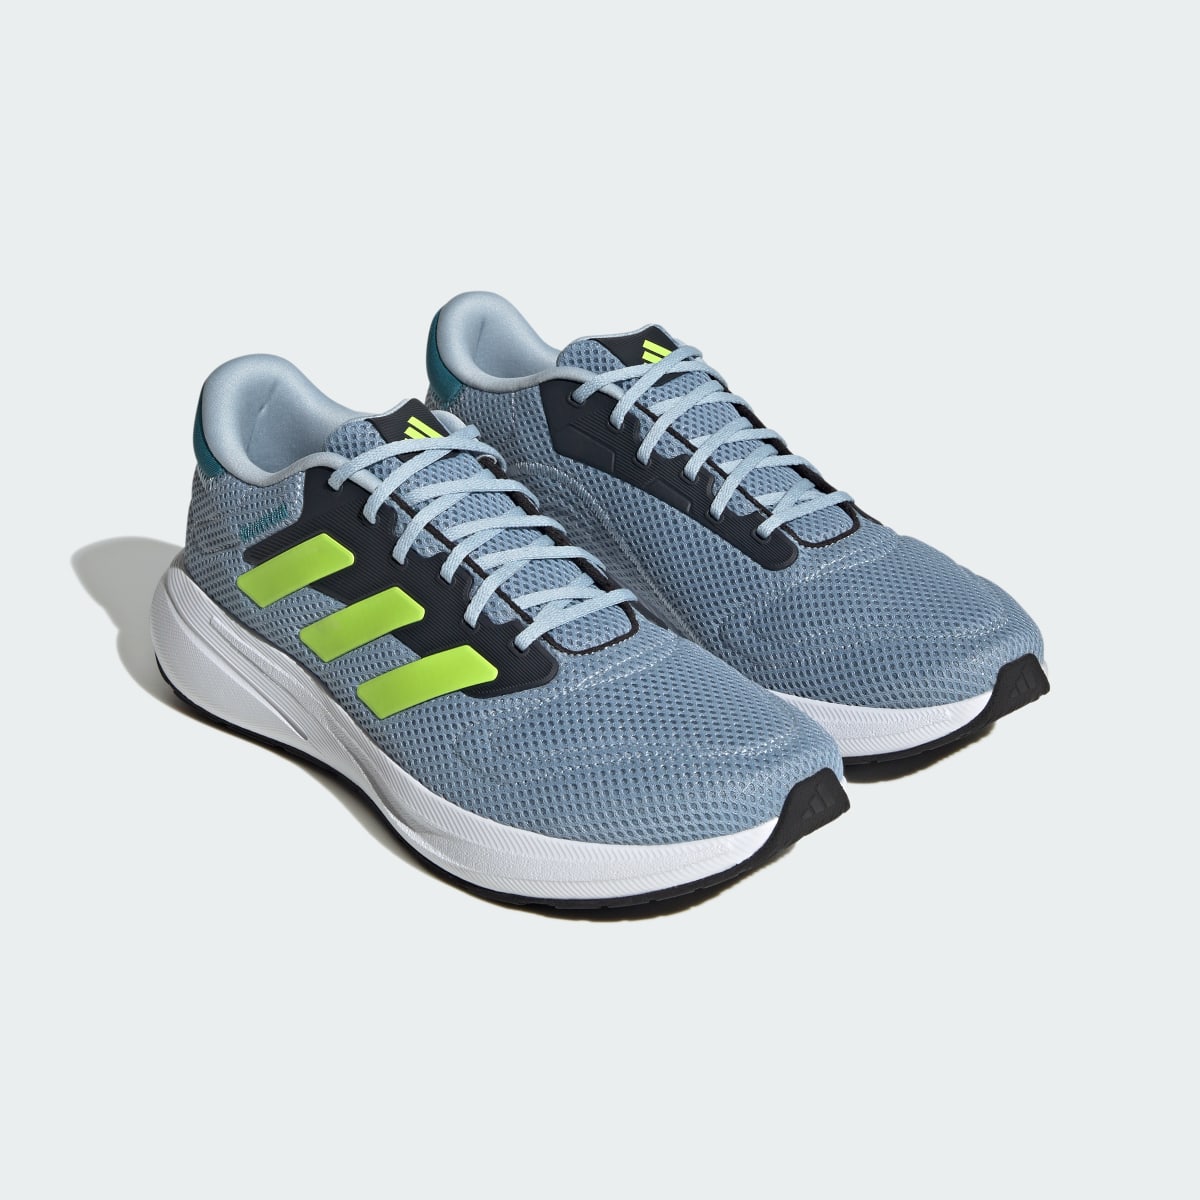 Adidas Response Runner Shoes. 5